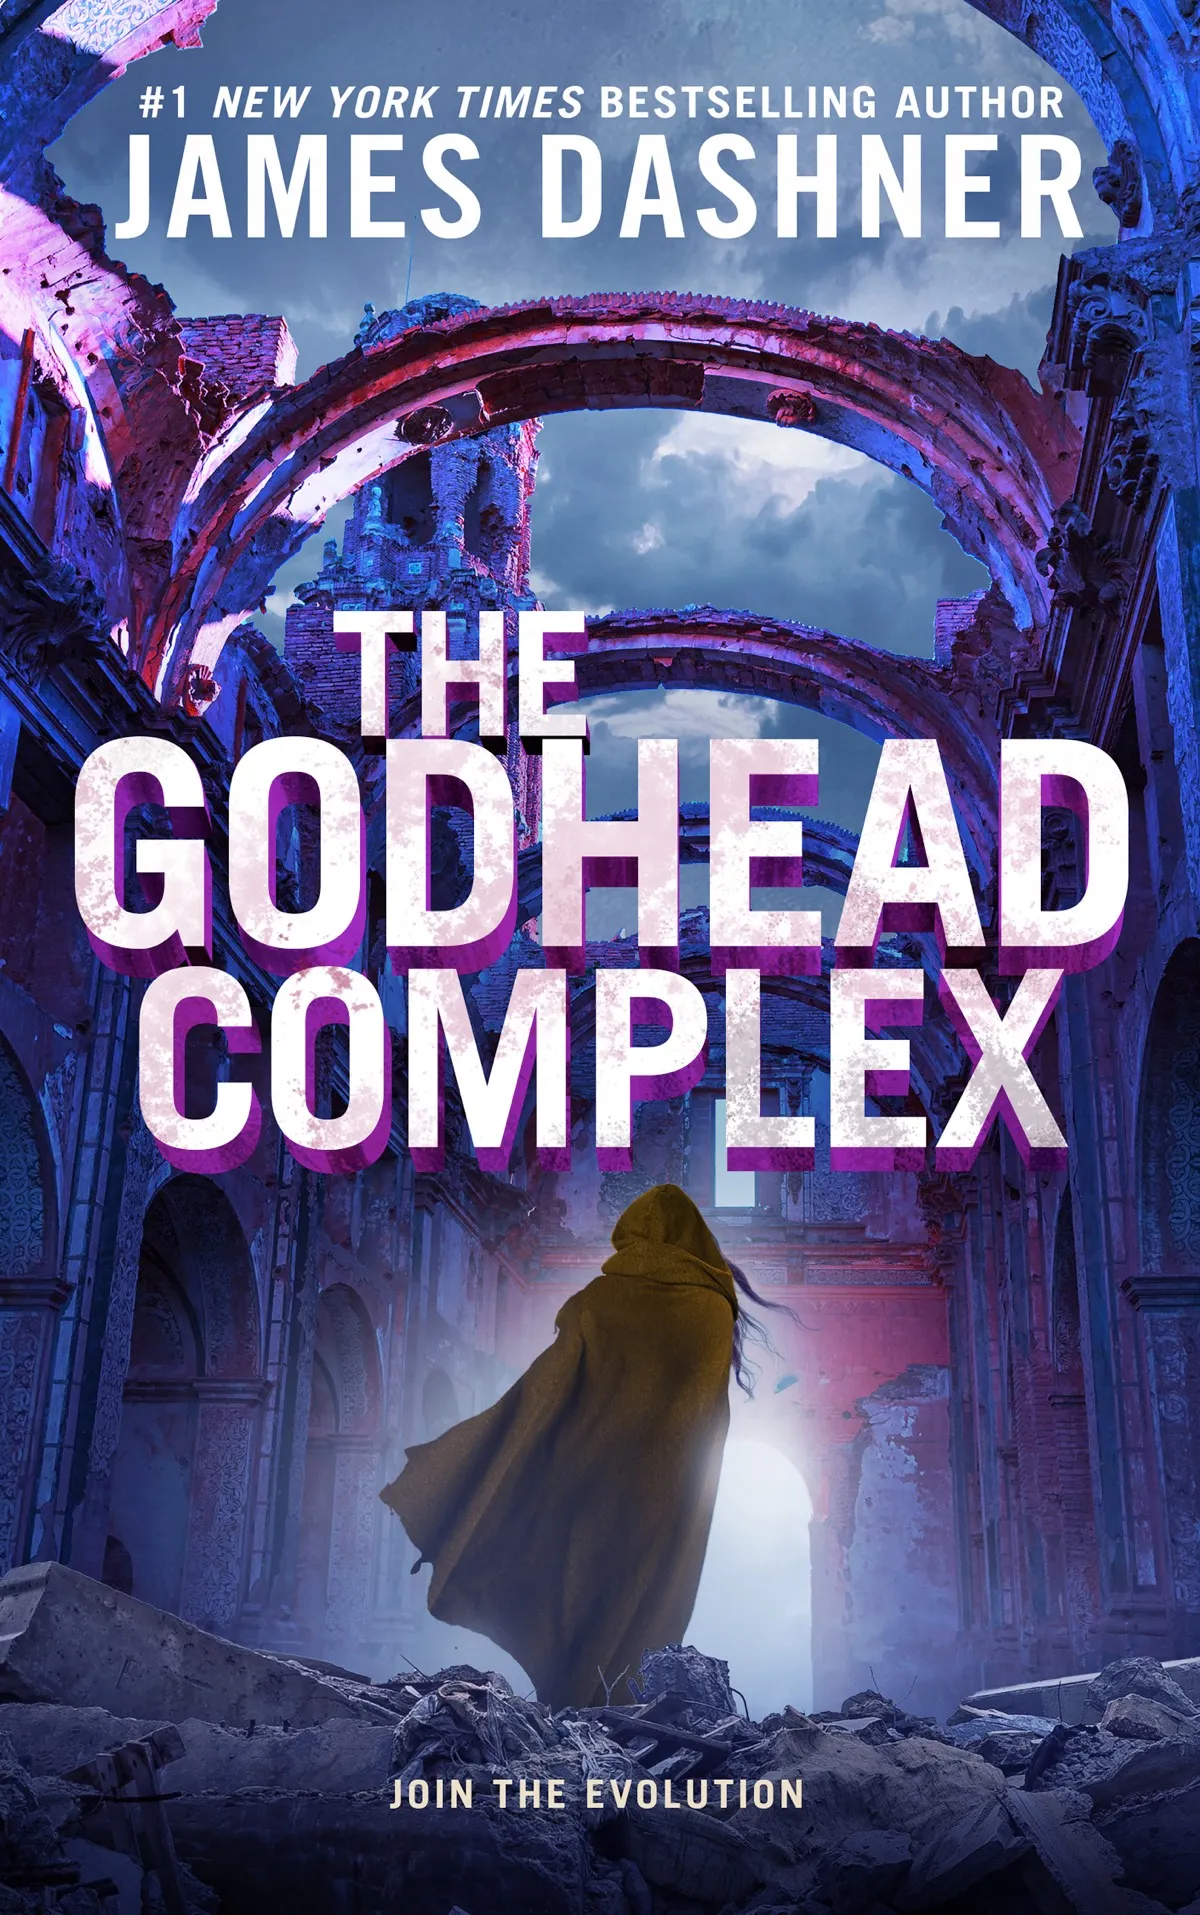 The Godhead Complex (The Maze Cutter #2)